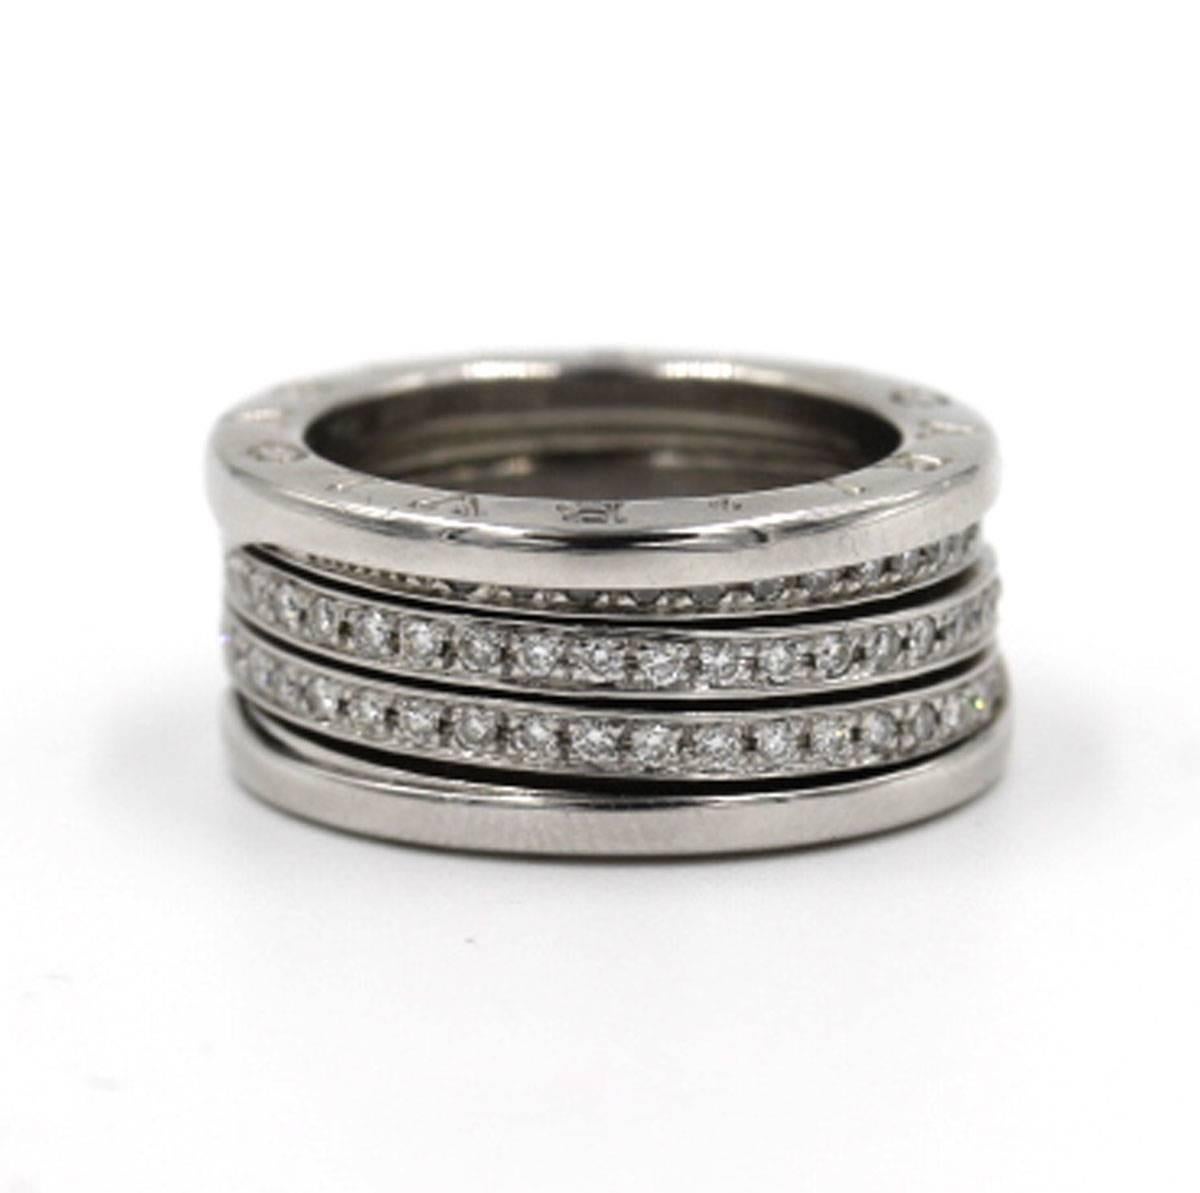 Current Model Bulgari B-Zero Three Row Diamond Ring in 18 Karat White Gold. The ring is size 55, and comes with original Bulgari box. The retail price is $9,350.